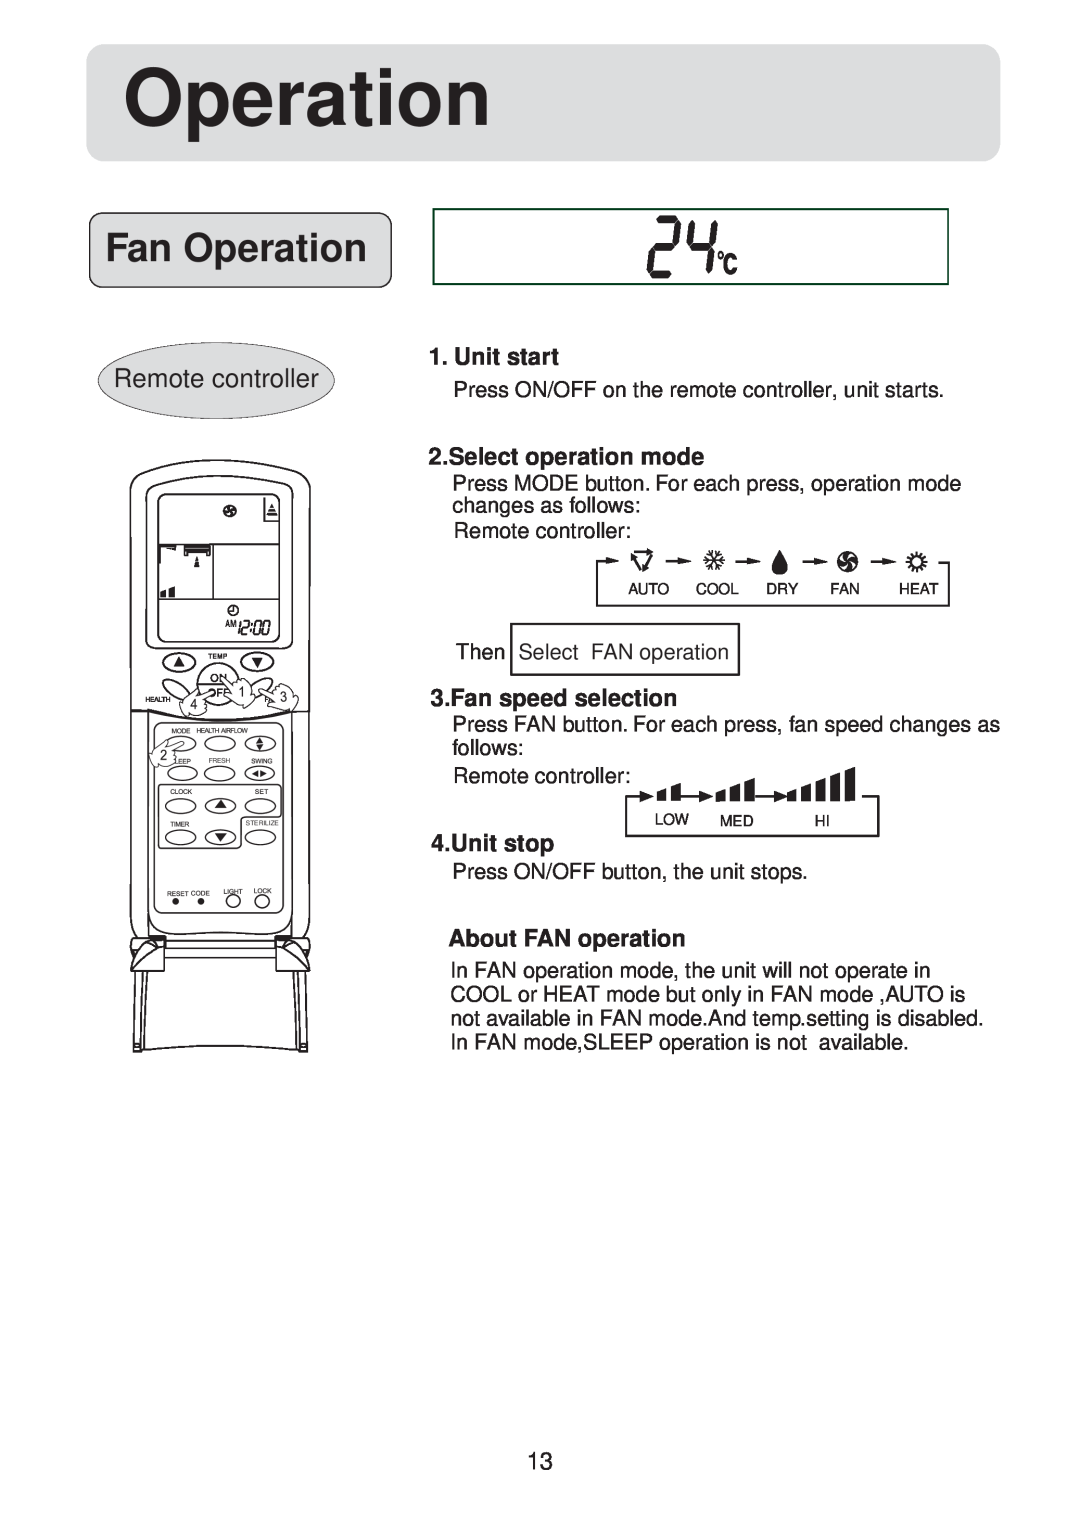 Haier HSU-09HV03/R2(SDB) Fan Operation, Fan speed selection, Unit stop, About FAN operation, Remote controller, Unit start 